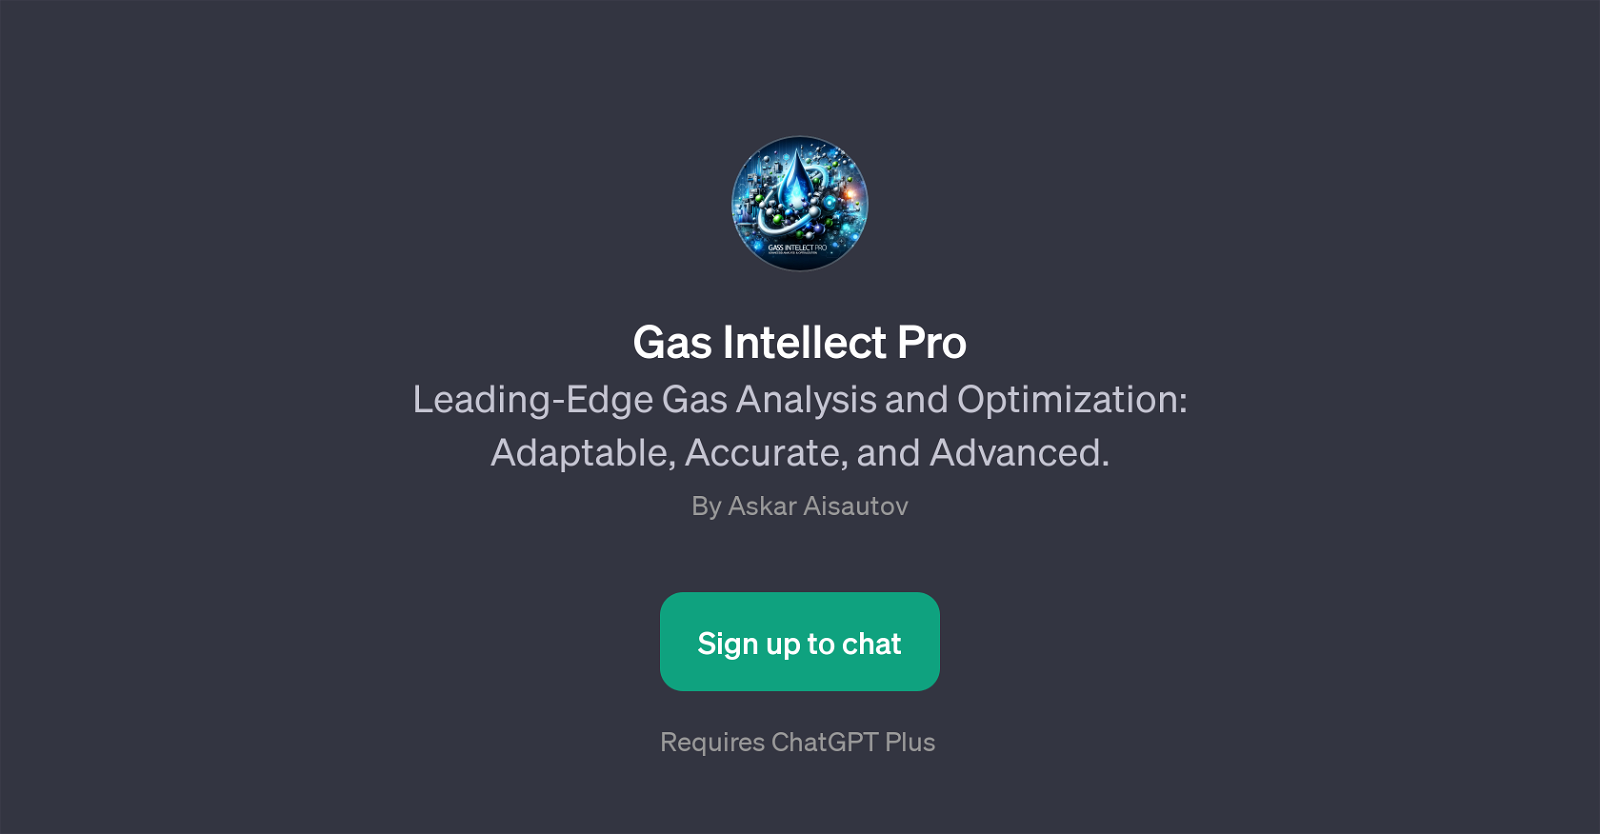 Gas Intellect Pro website